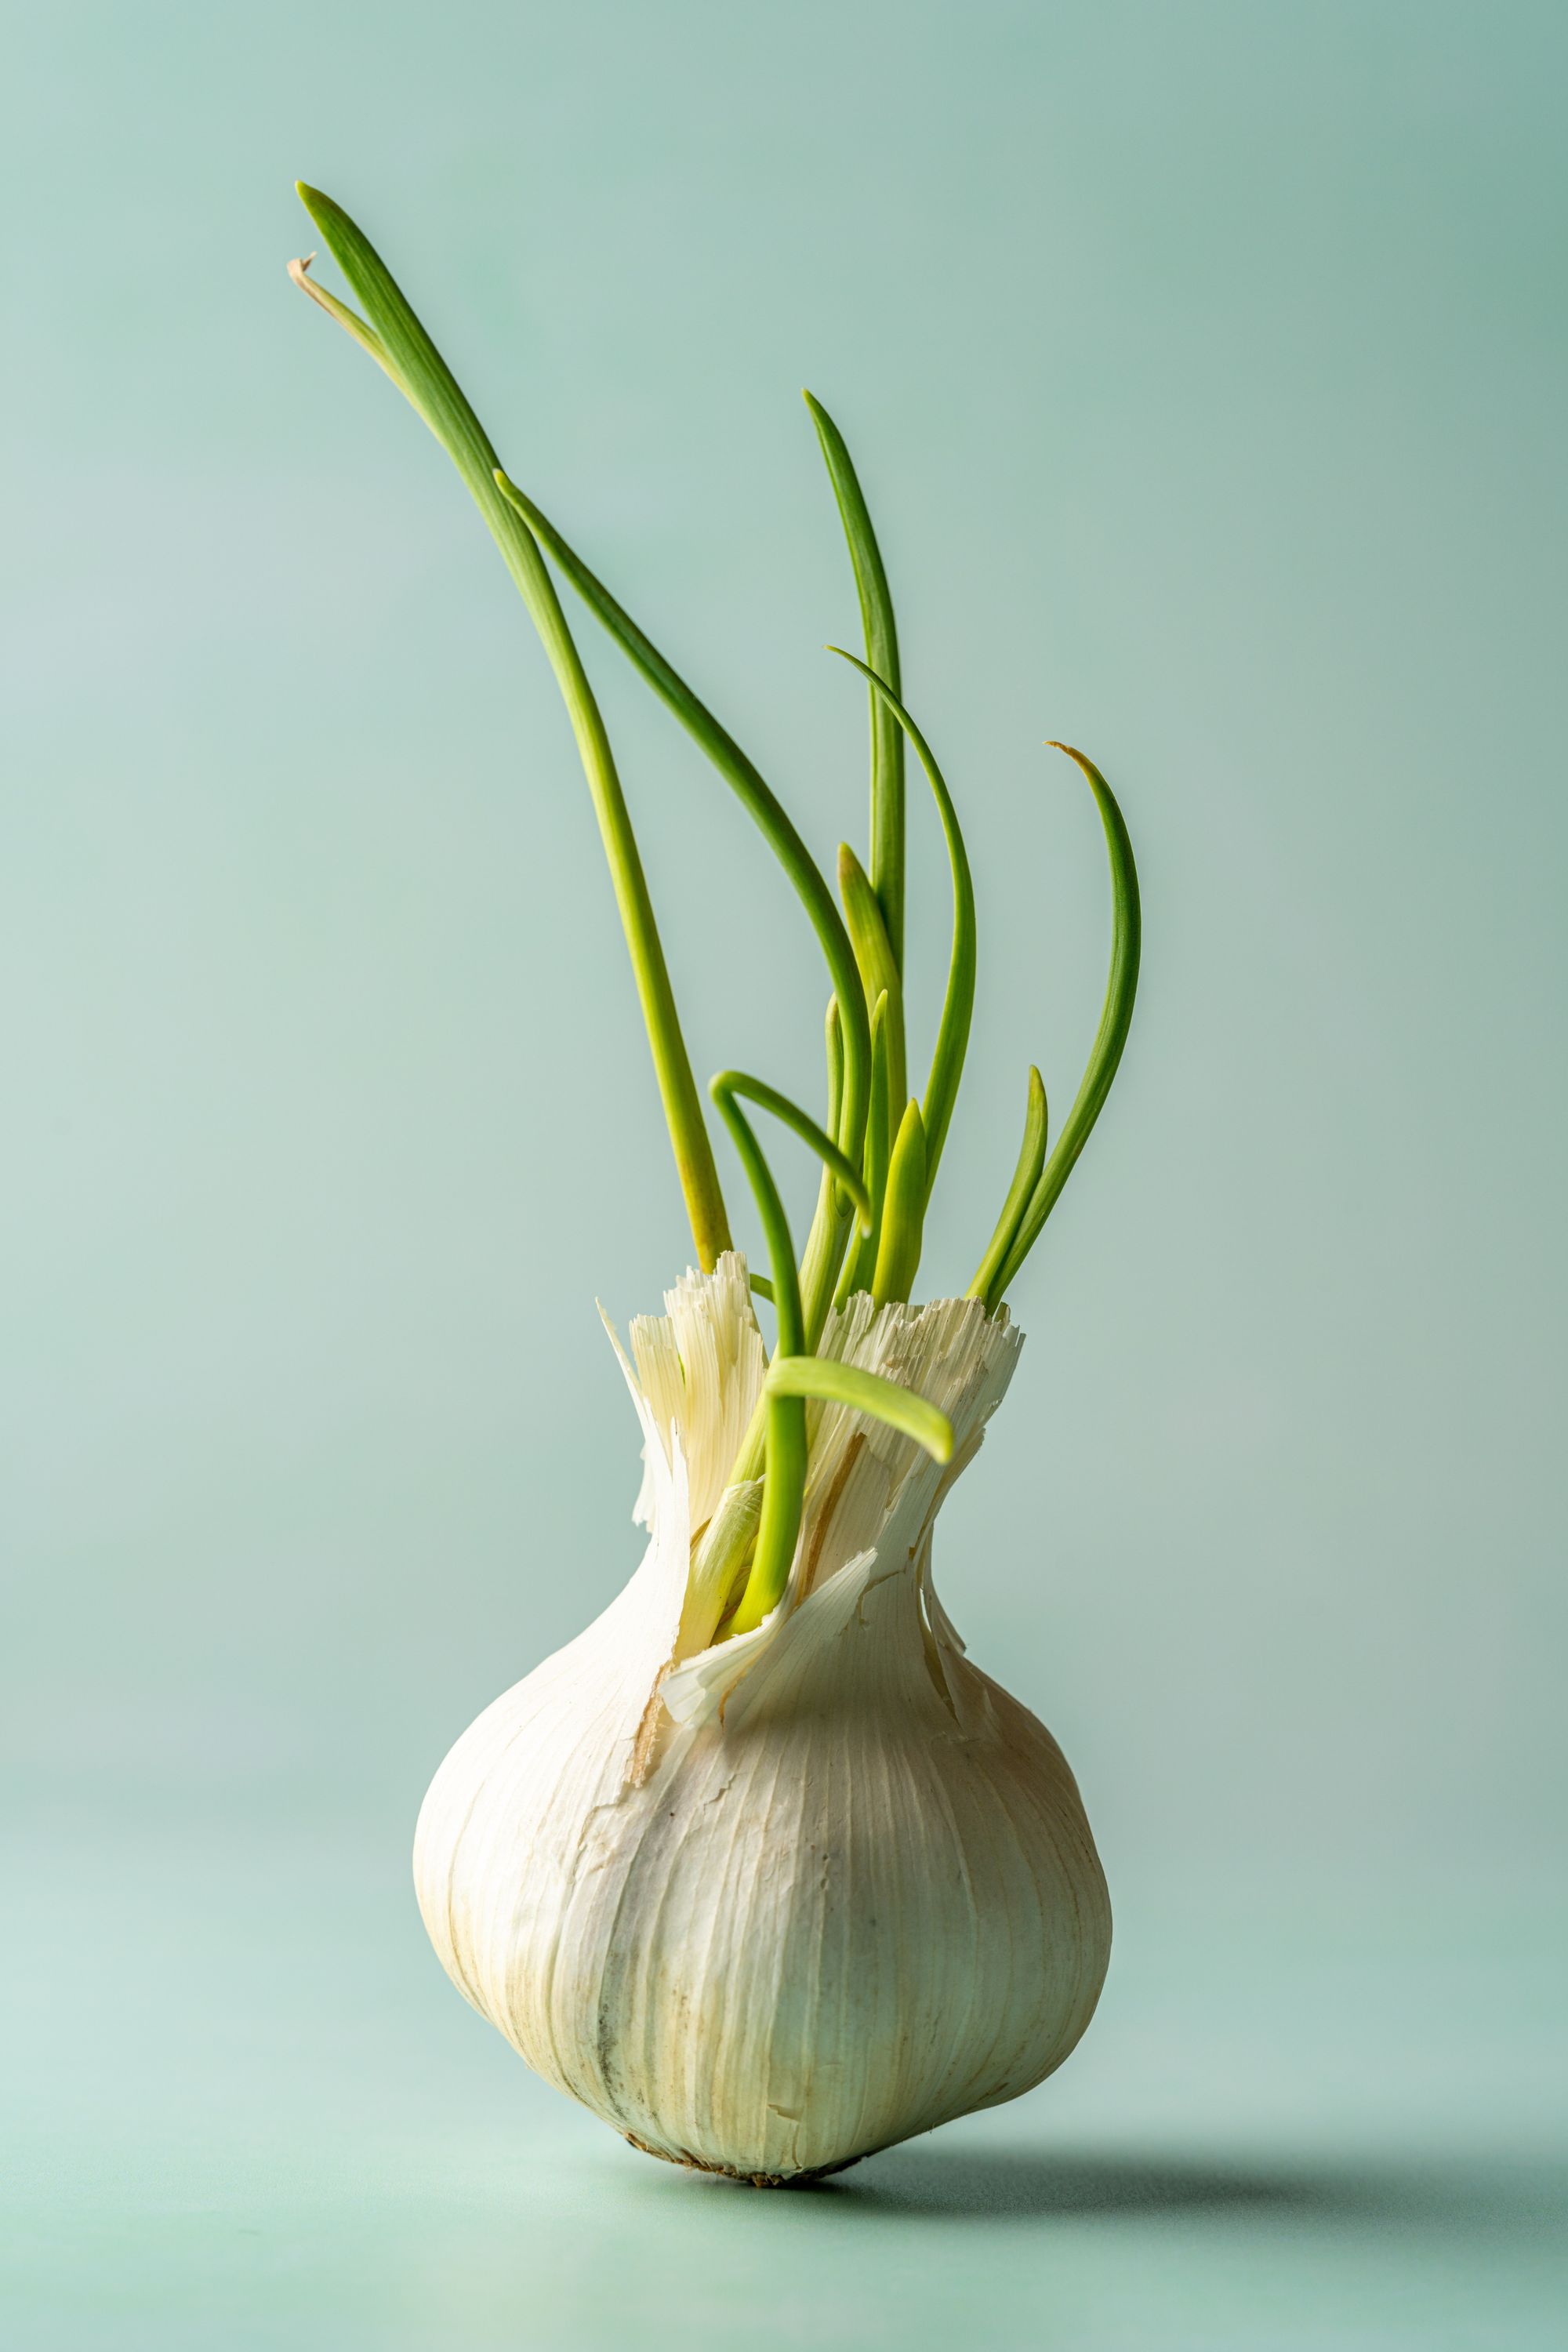 Garlic bulb sprouting